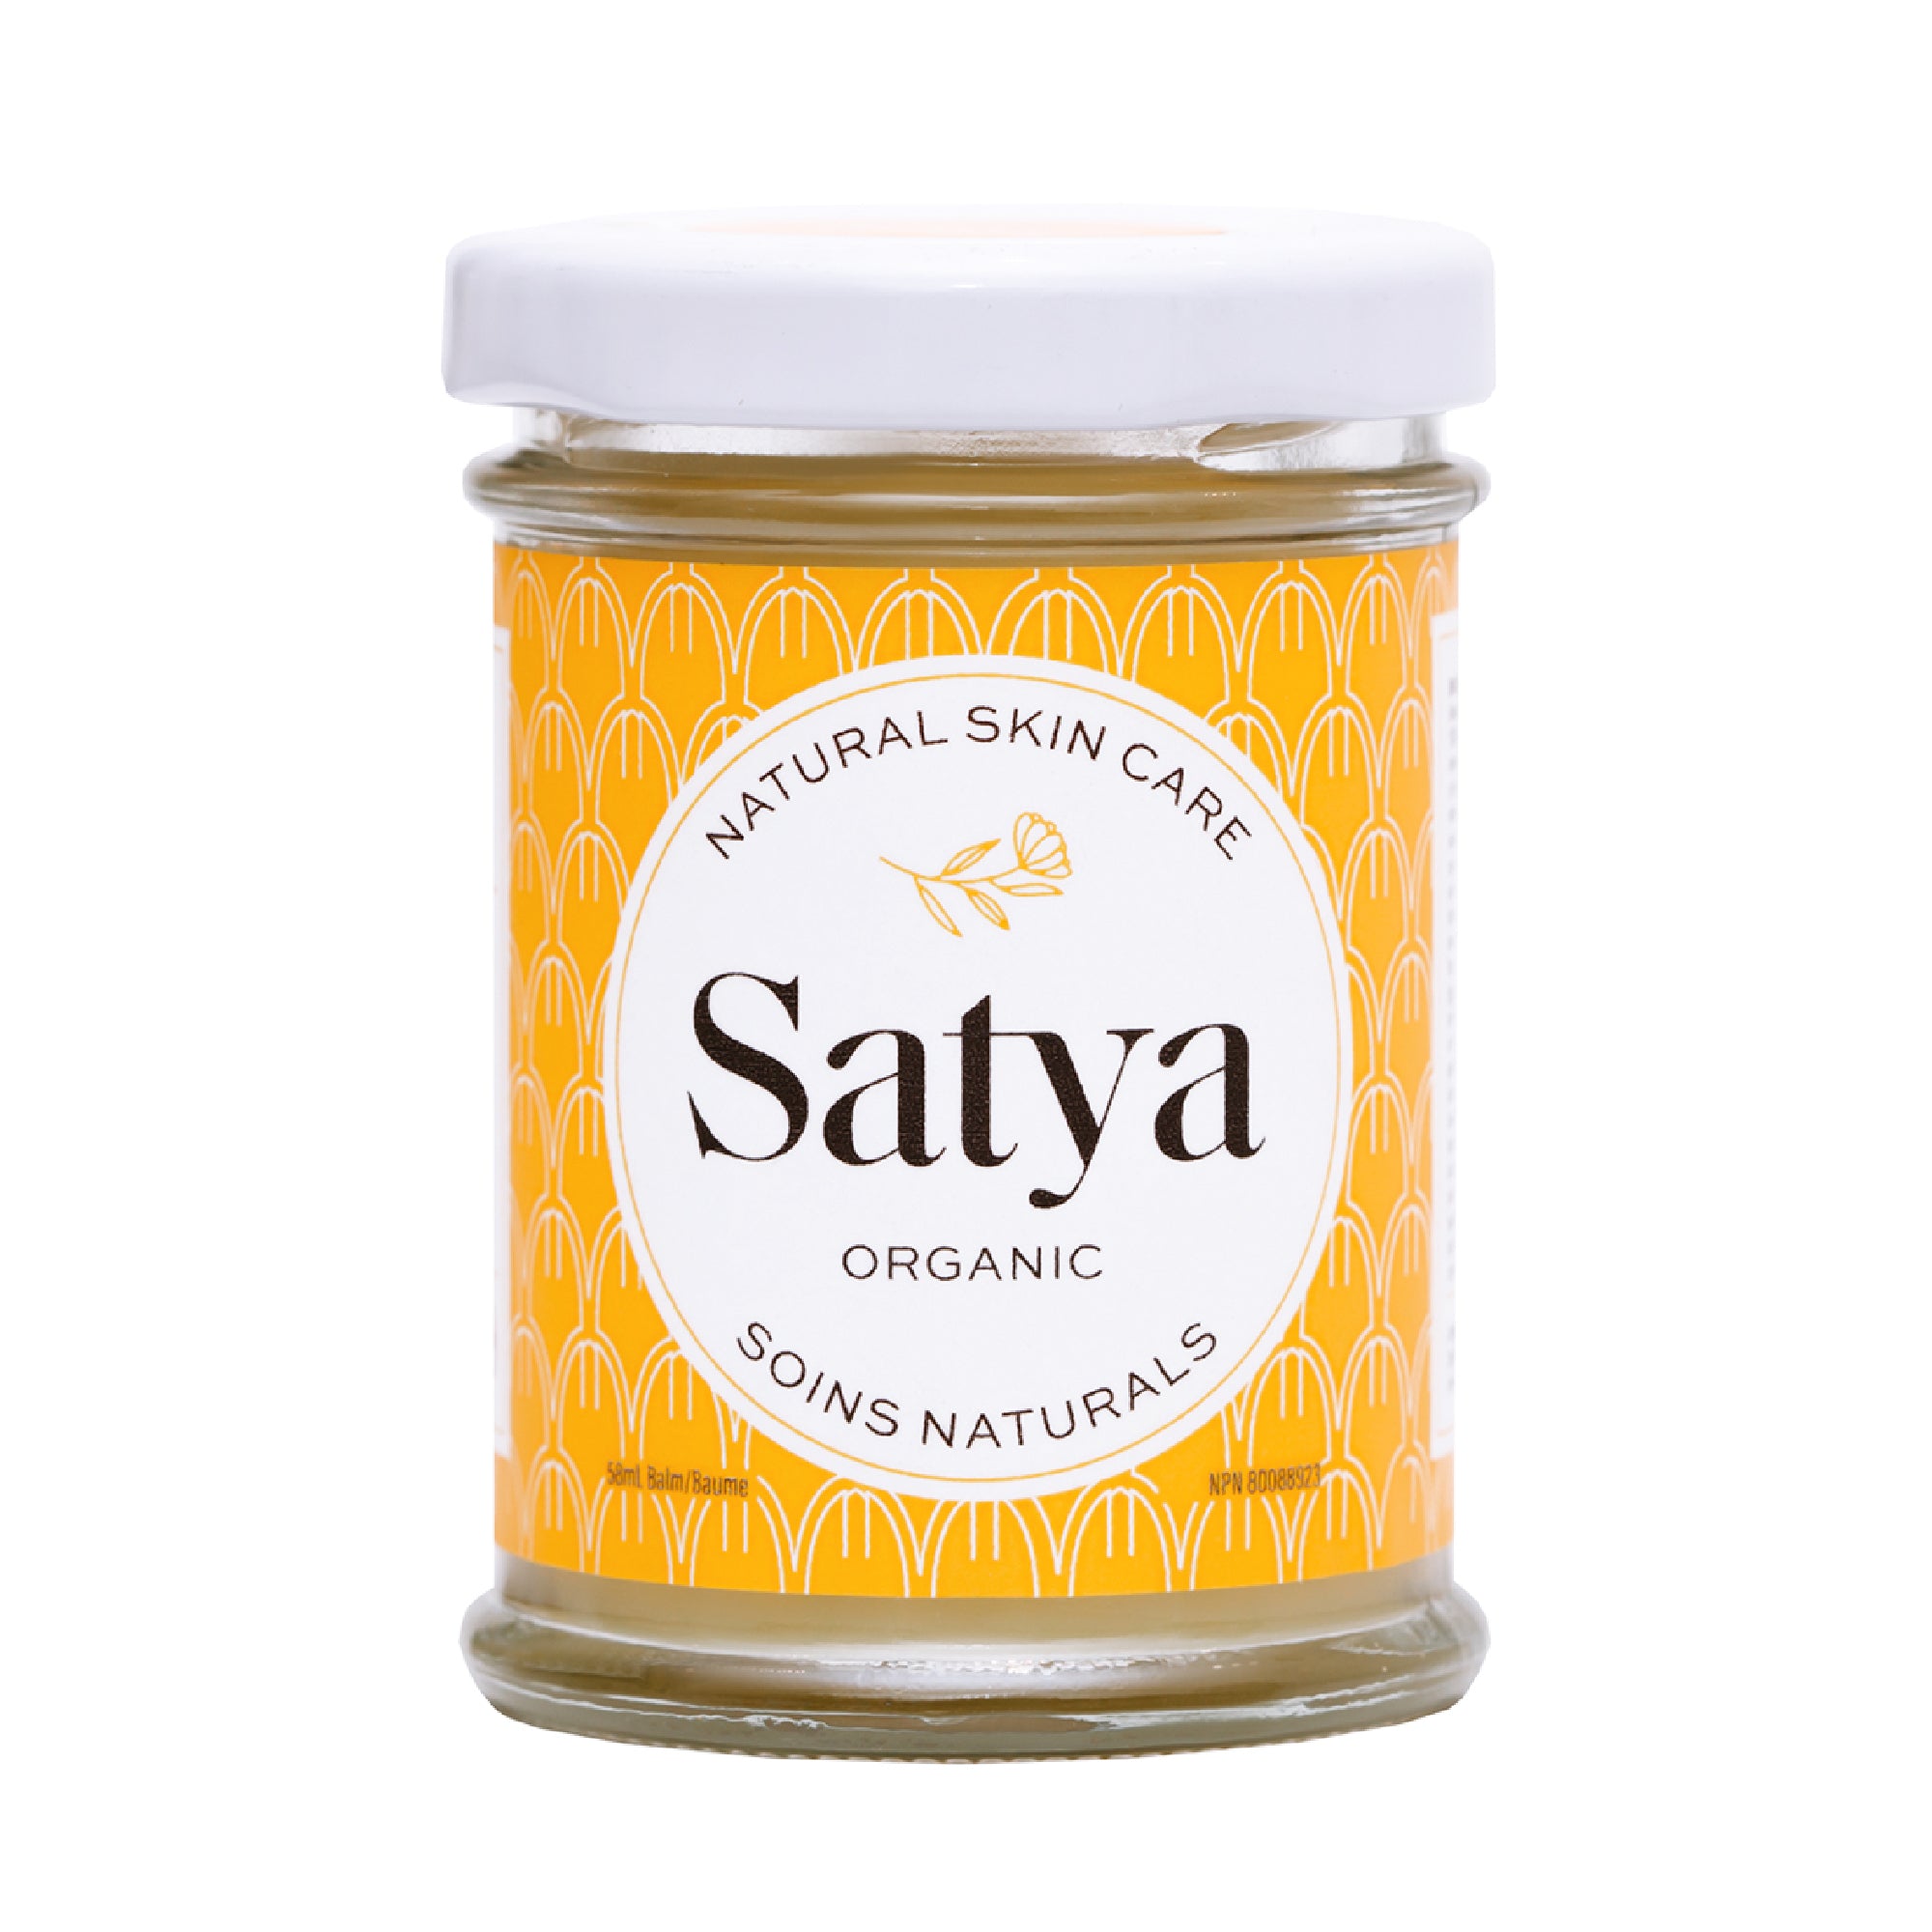 The Satya Eczema Relief jar